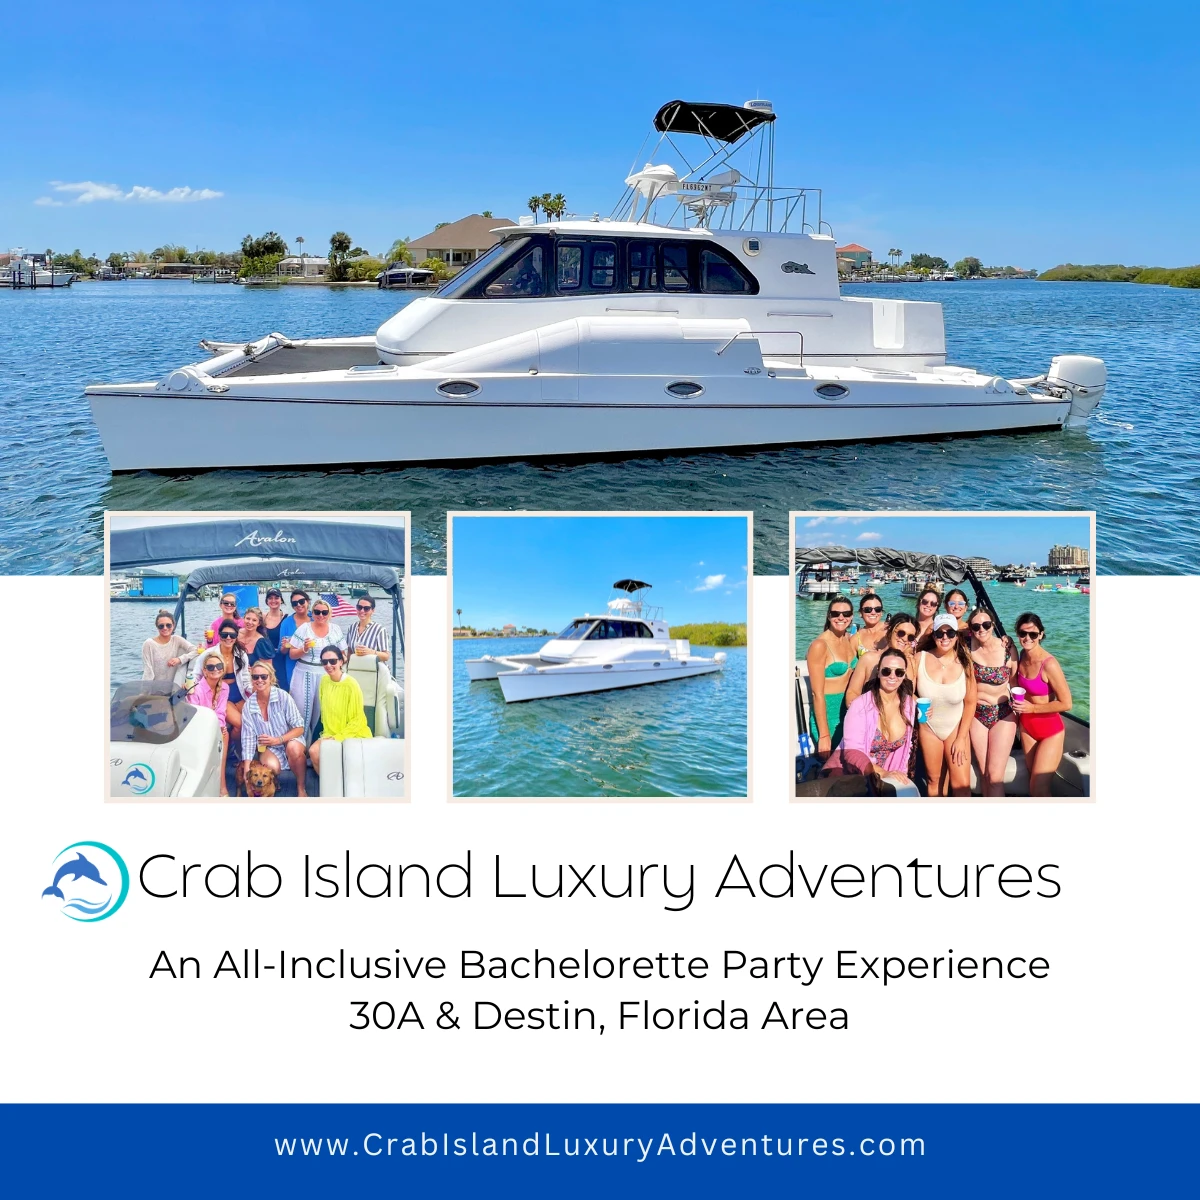 Crab Island Luxury Adventures